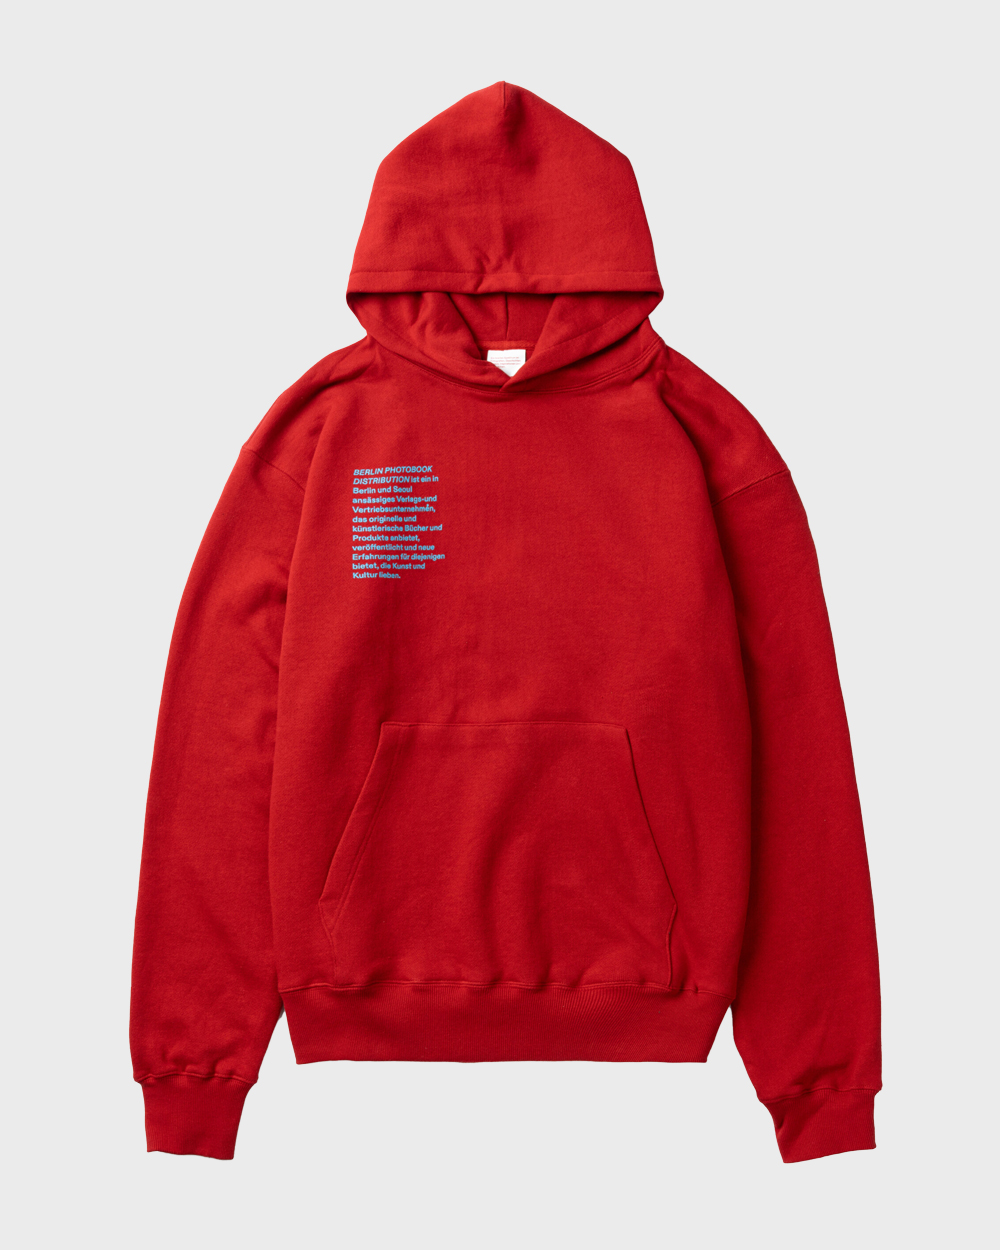 BPD Mitarbeiter 002 hoodie (Red)